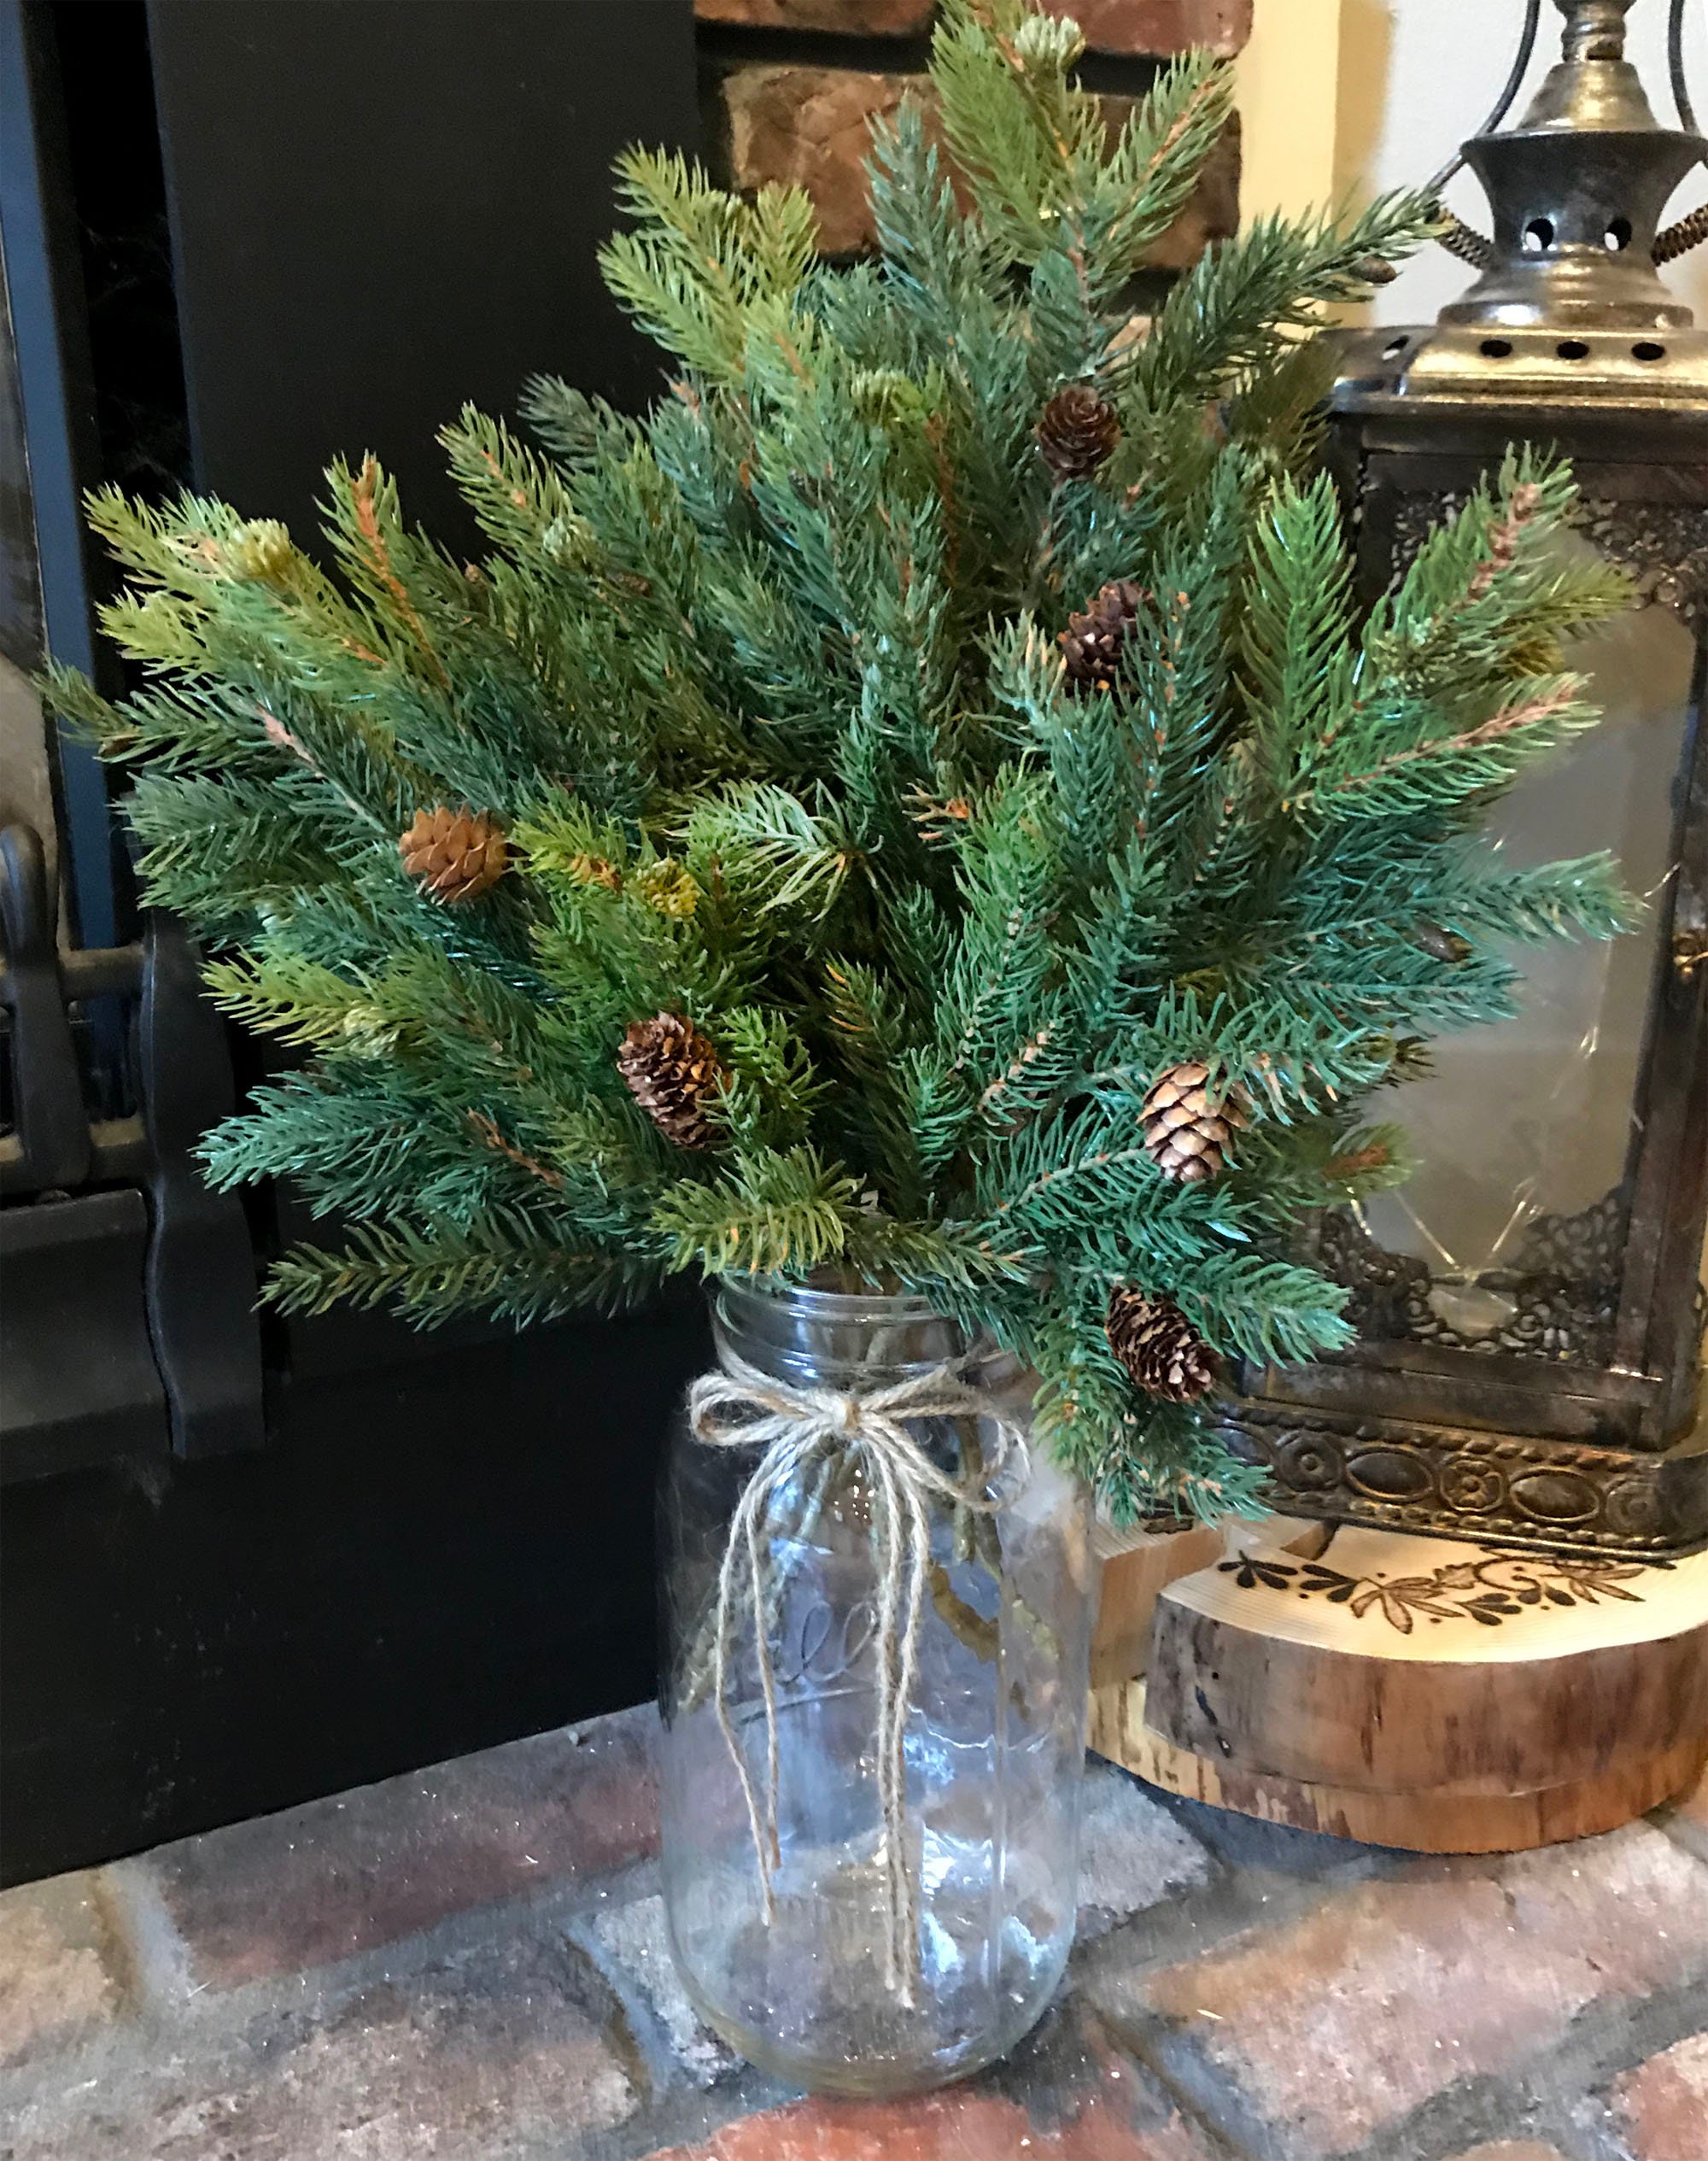 Christmas Tree Branch, Fraser Fir Pine Spray, Artificial Winter